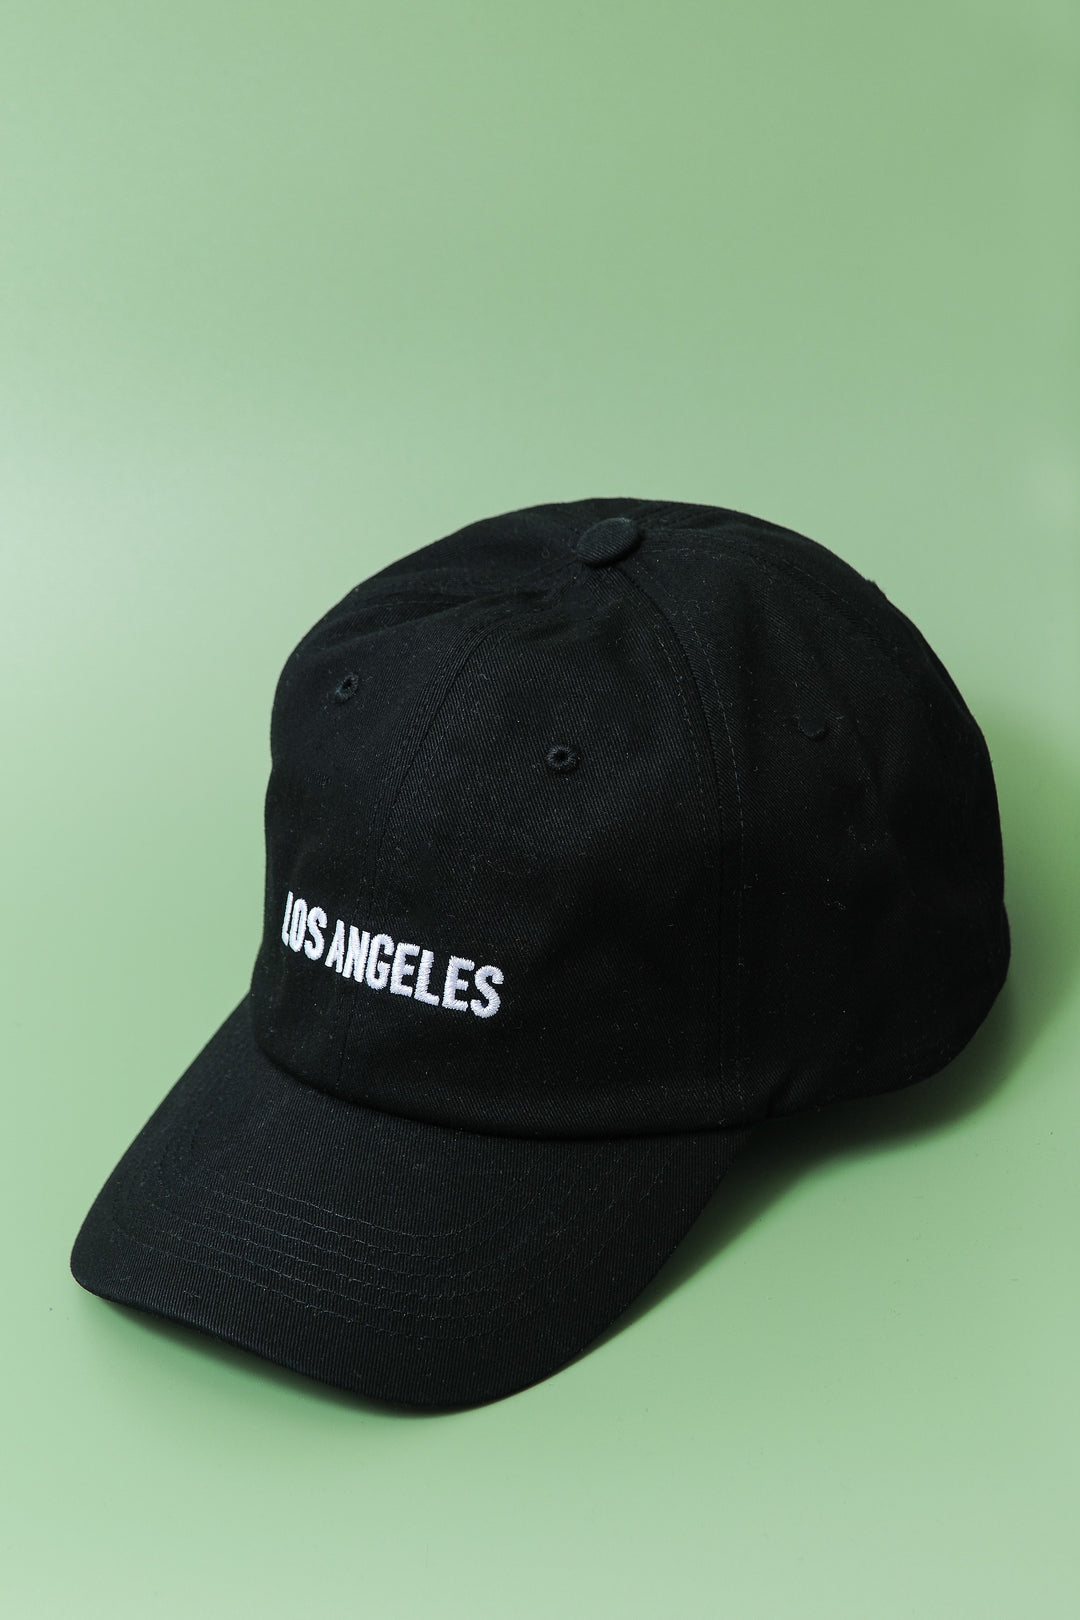 LOS ANGELES BASEBALL HAT